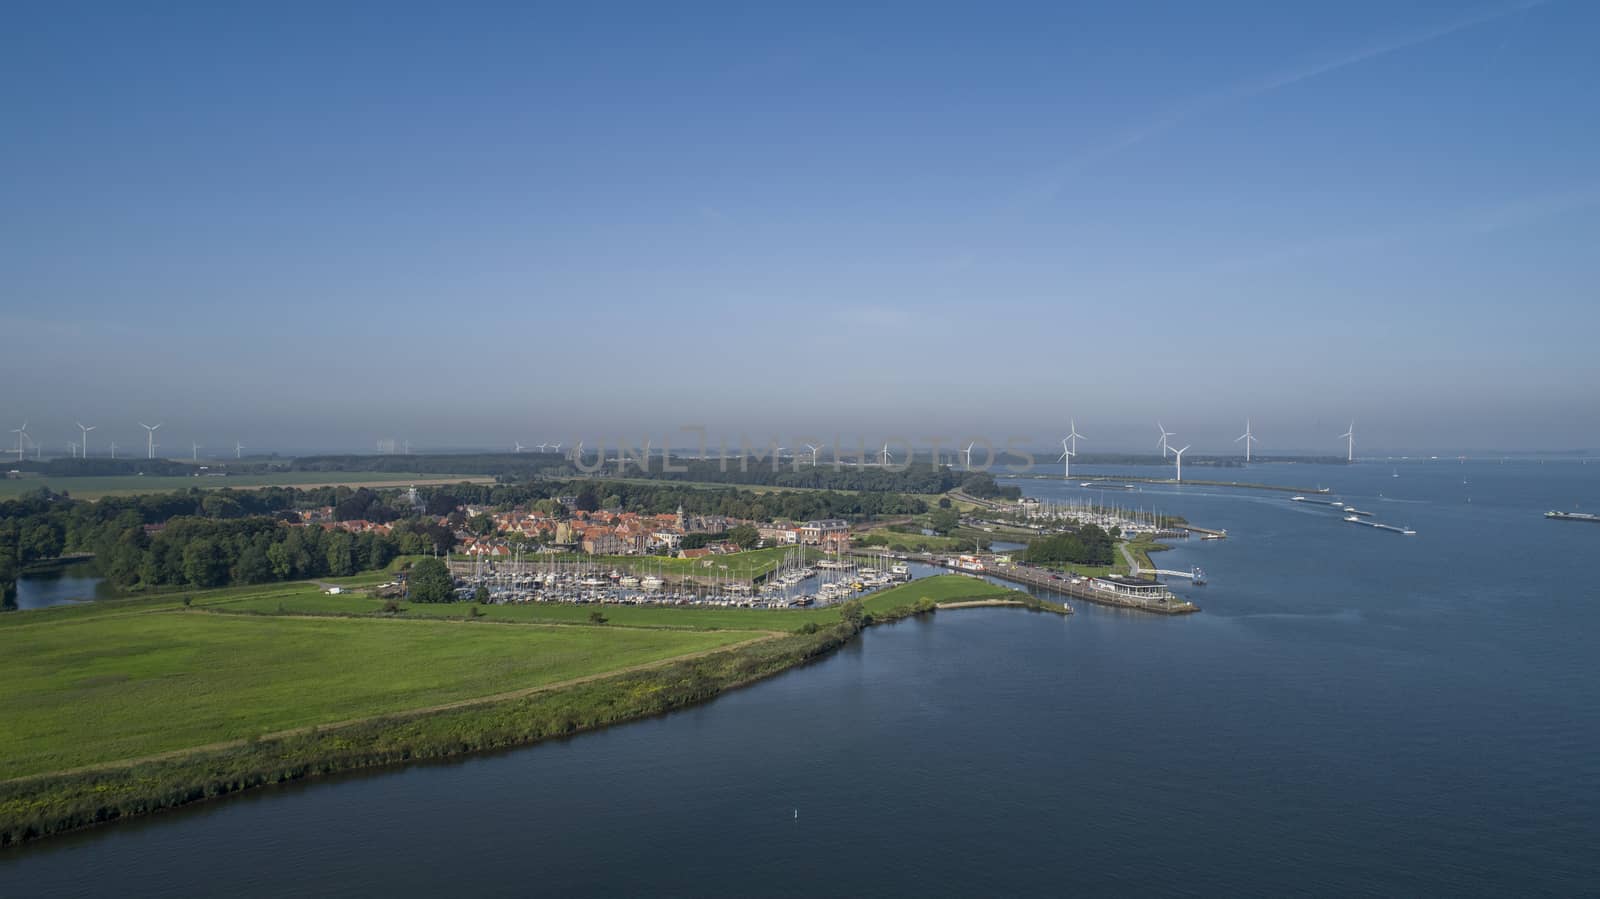 Aerial view of the fortified city of Willemstad, Moerdijk in Netherlands by Tjeerdkruse